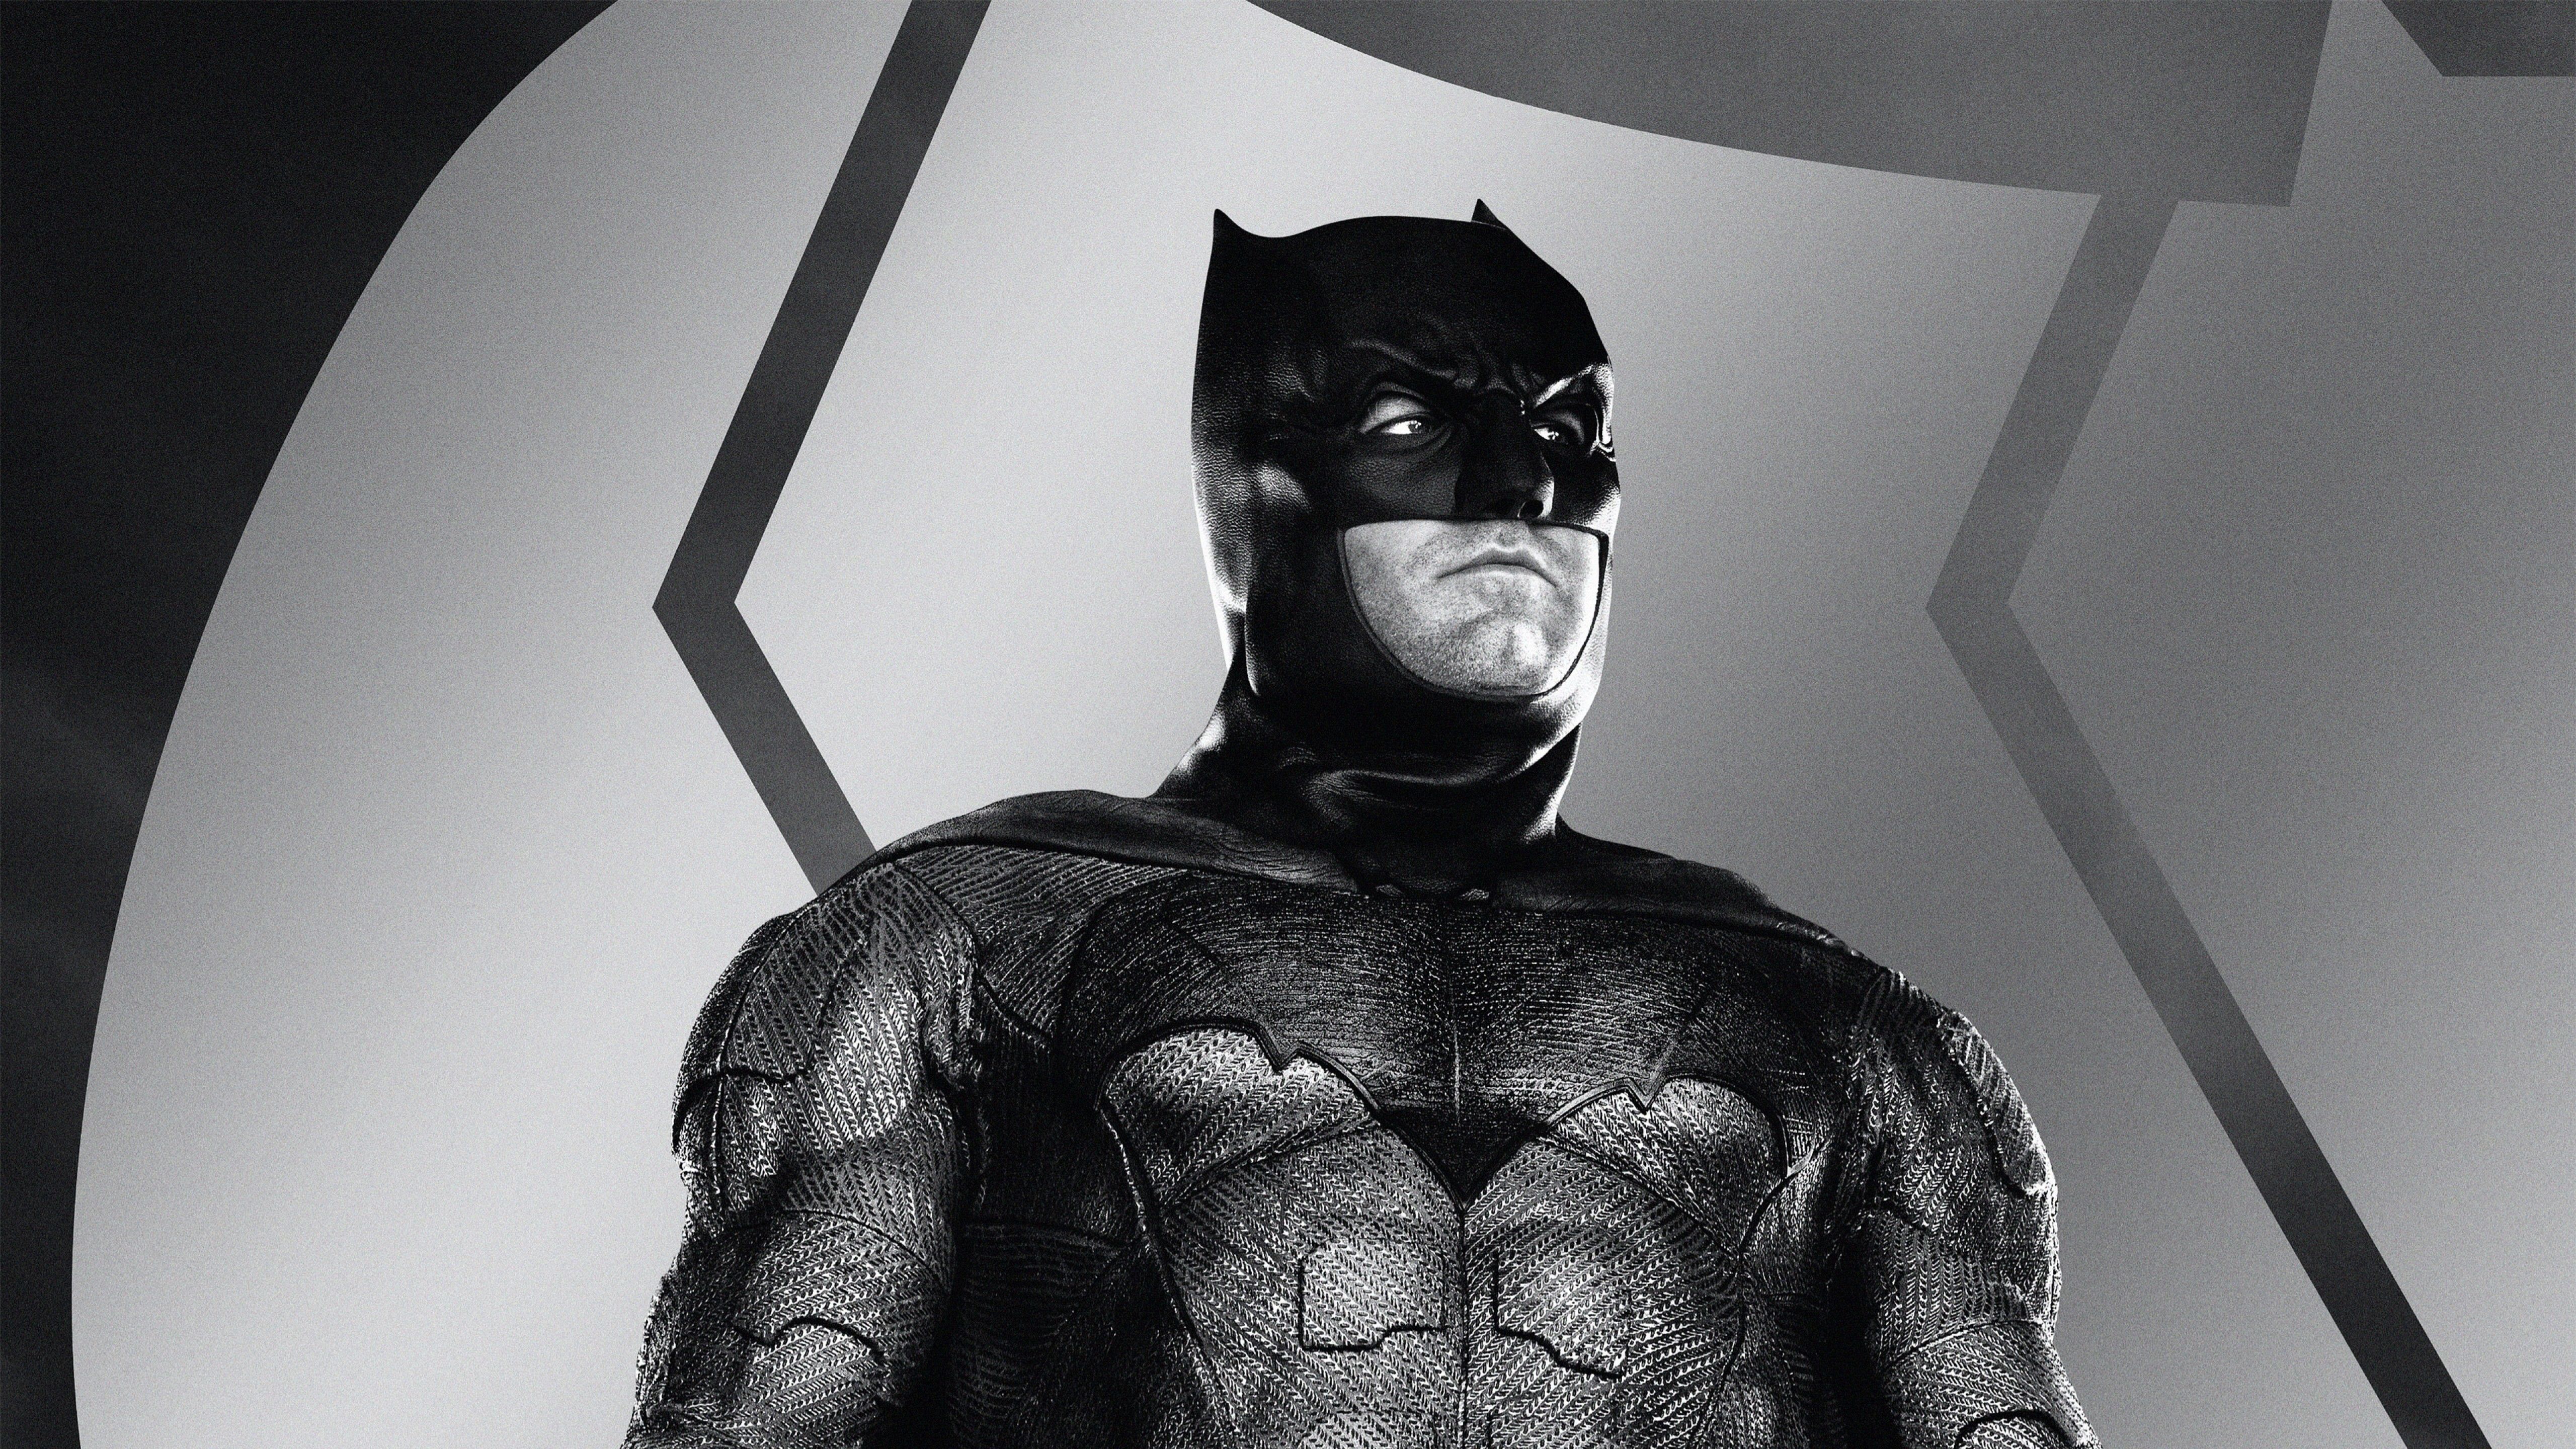 Zack Snyder's Justice League 4K Wallpaper, Batman, DC Comics, Monochrome, 2021 Movies, Movies